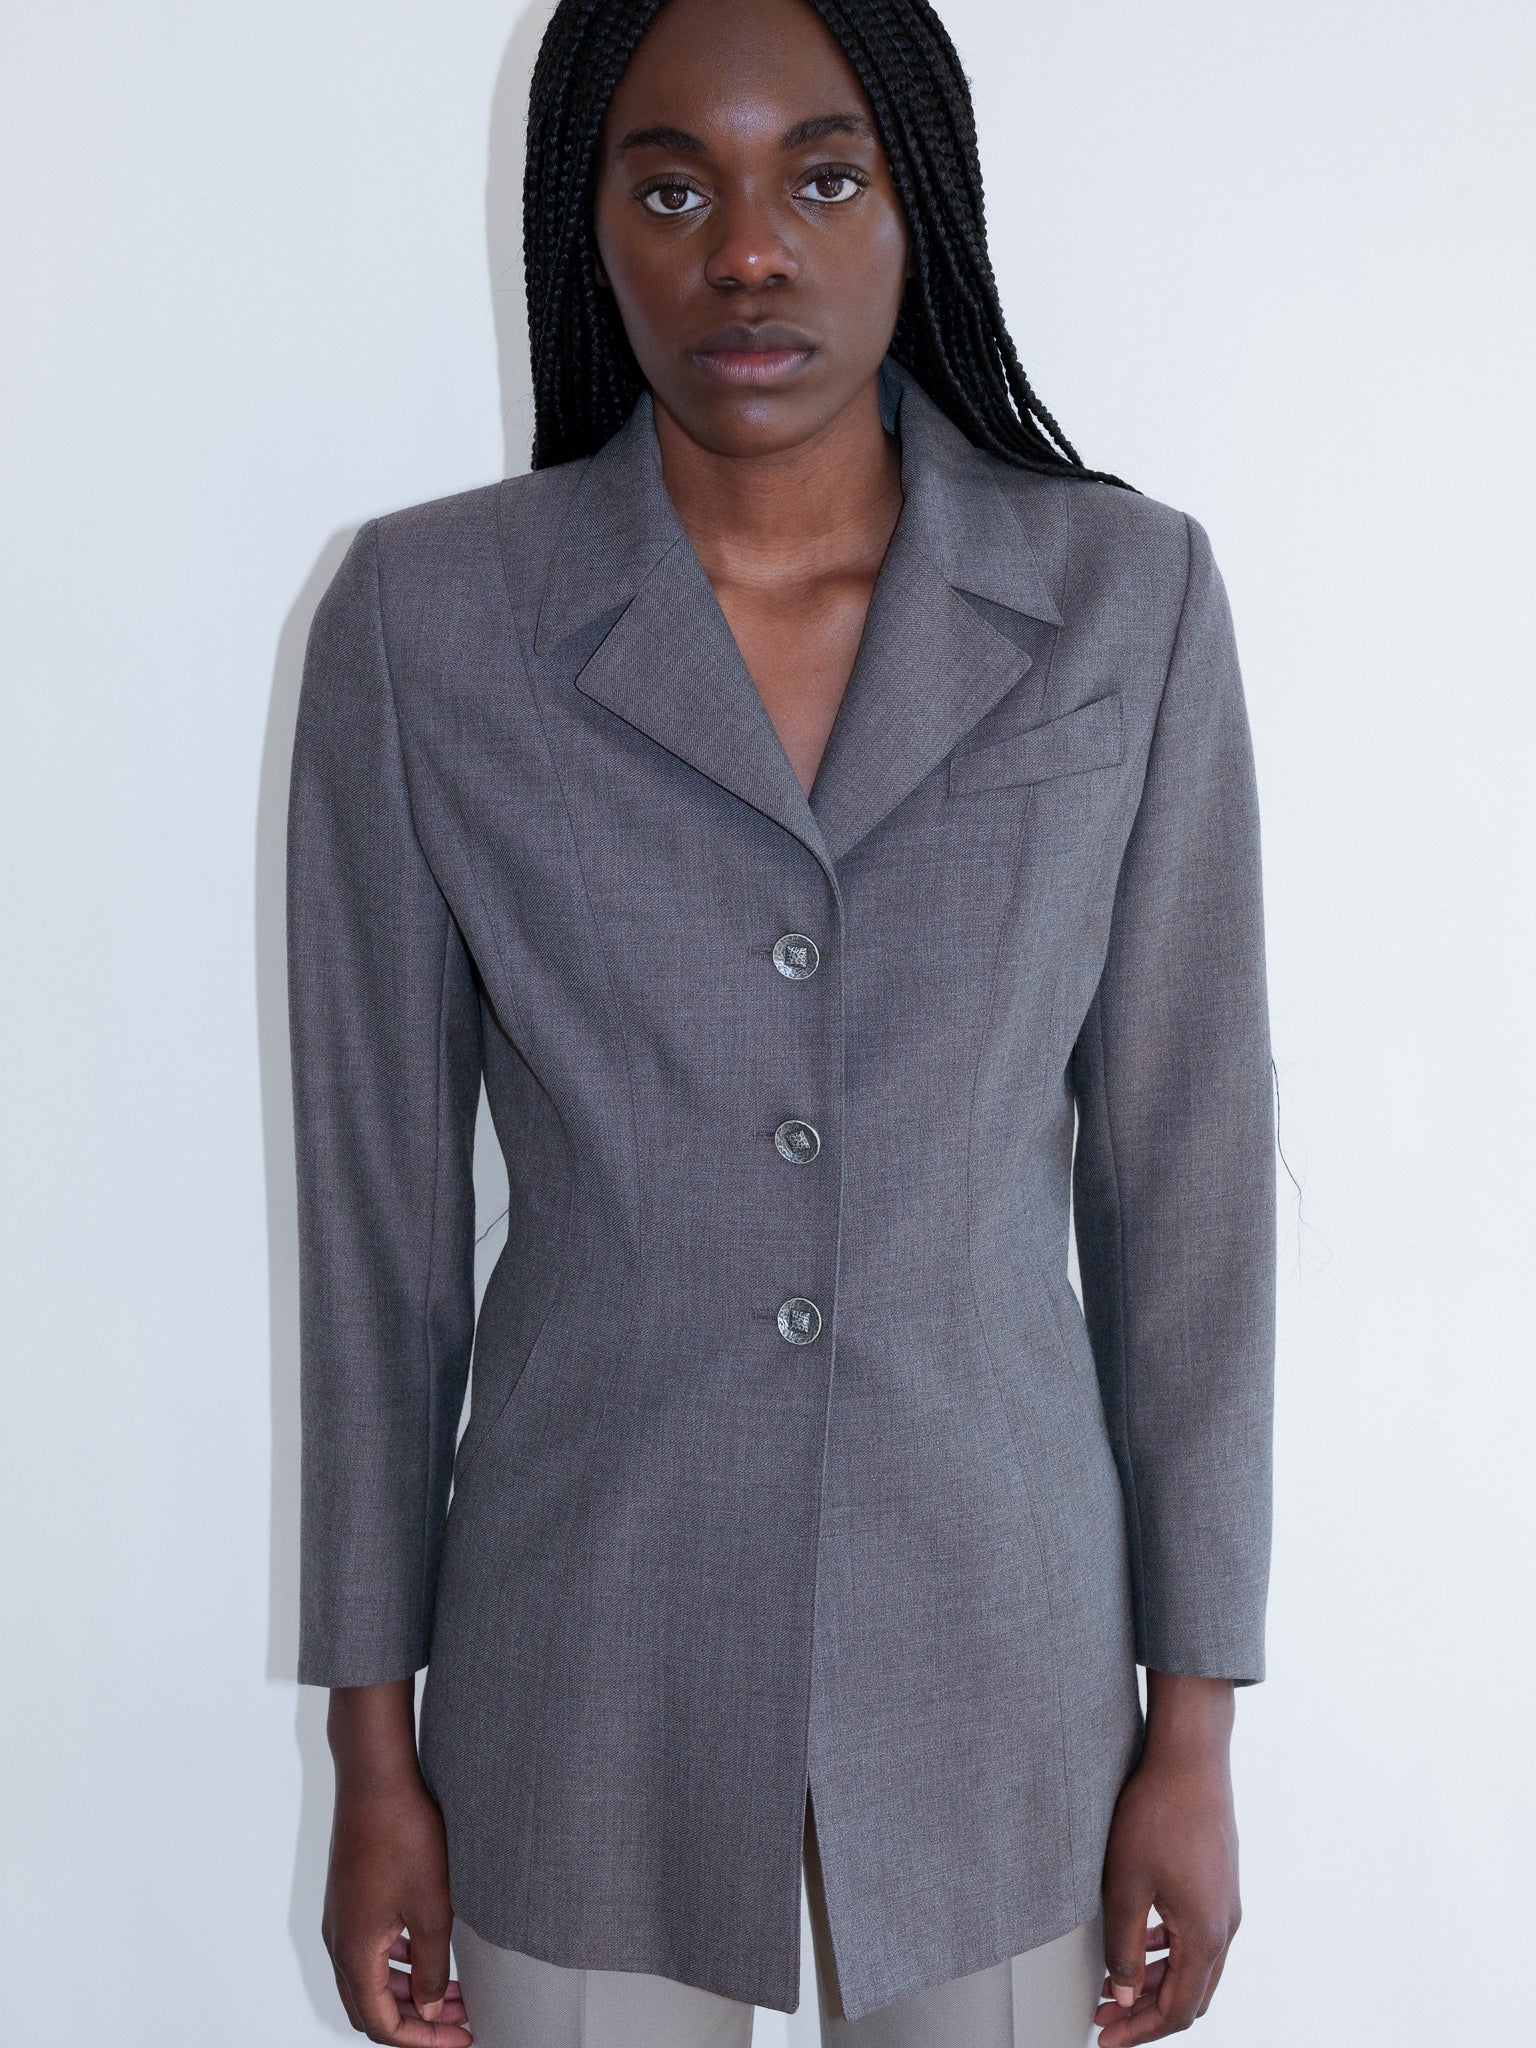 Balenciaga Outlet blazer for women  Black  Balenciaga blazer 623044  TIT17 online on GIGLIOCOM